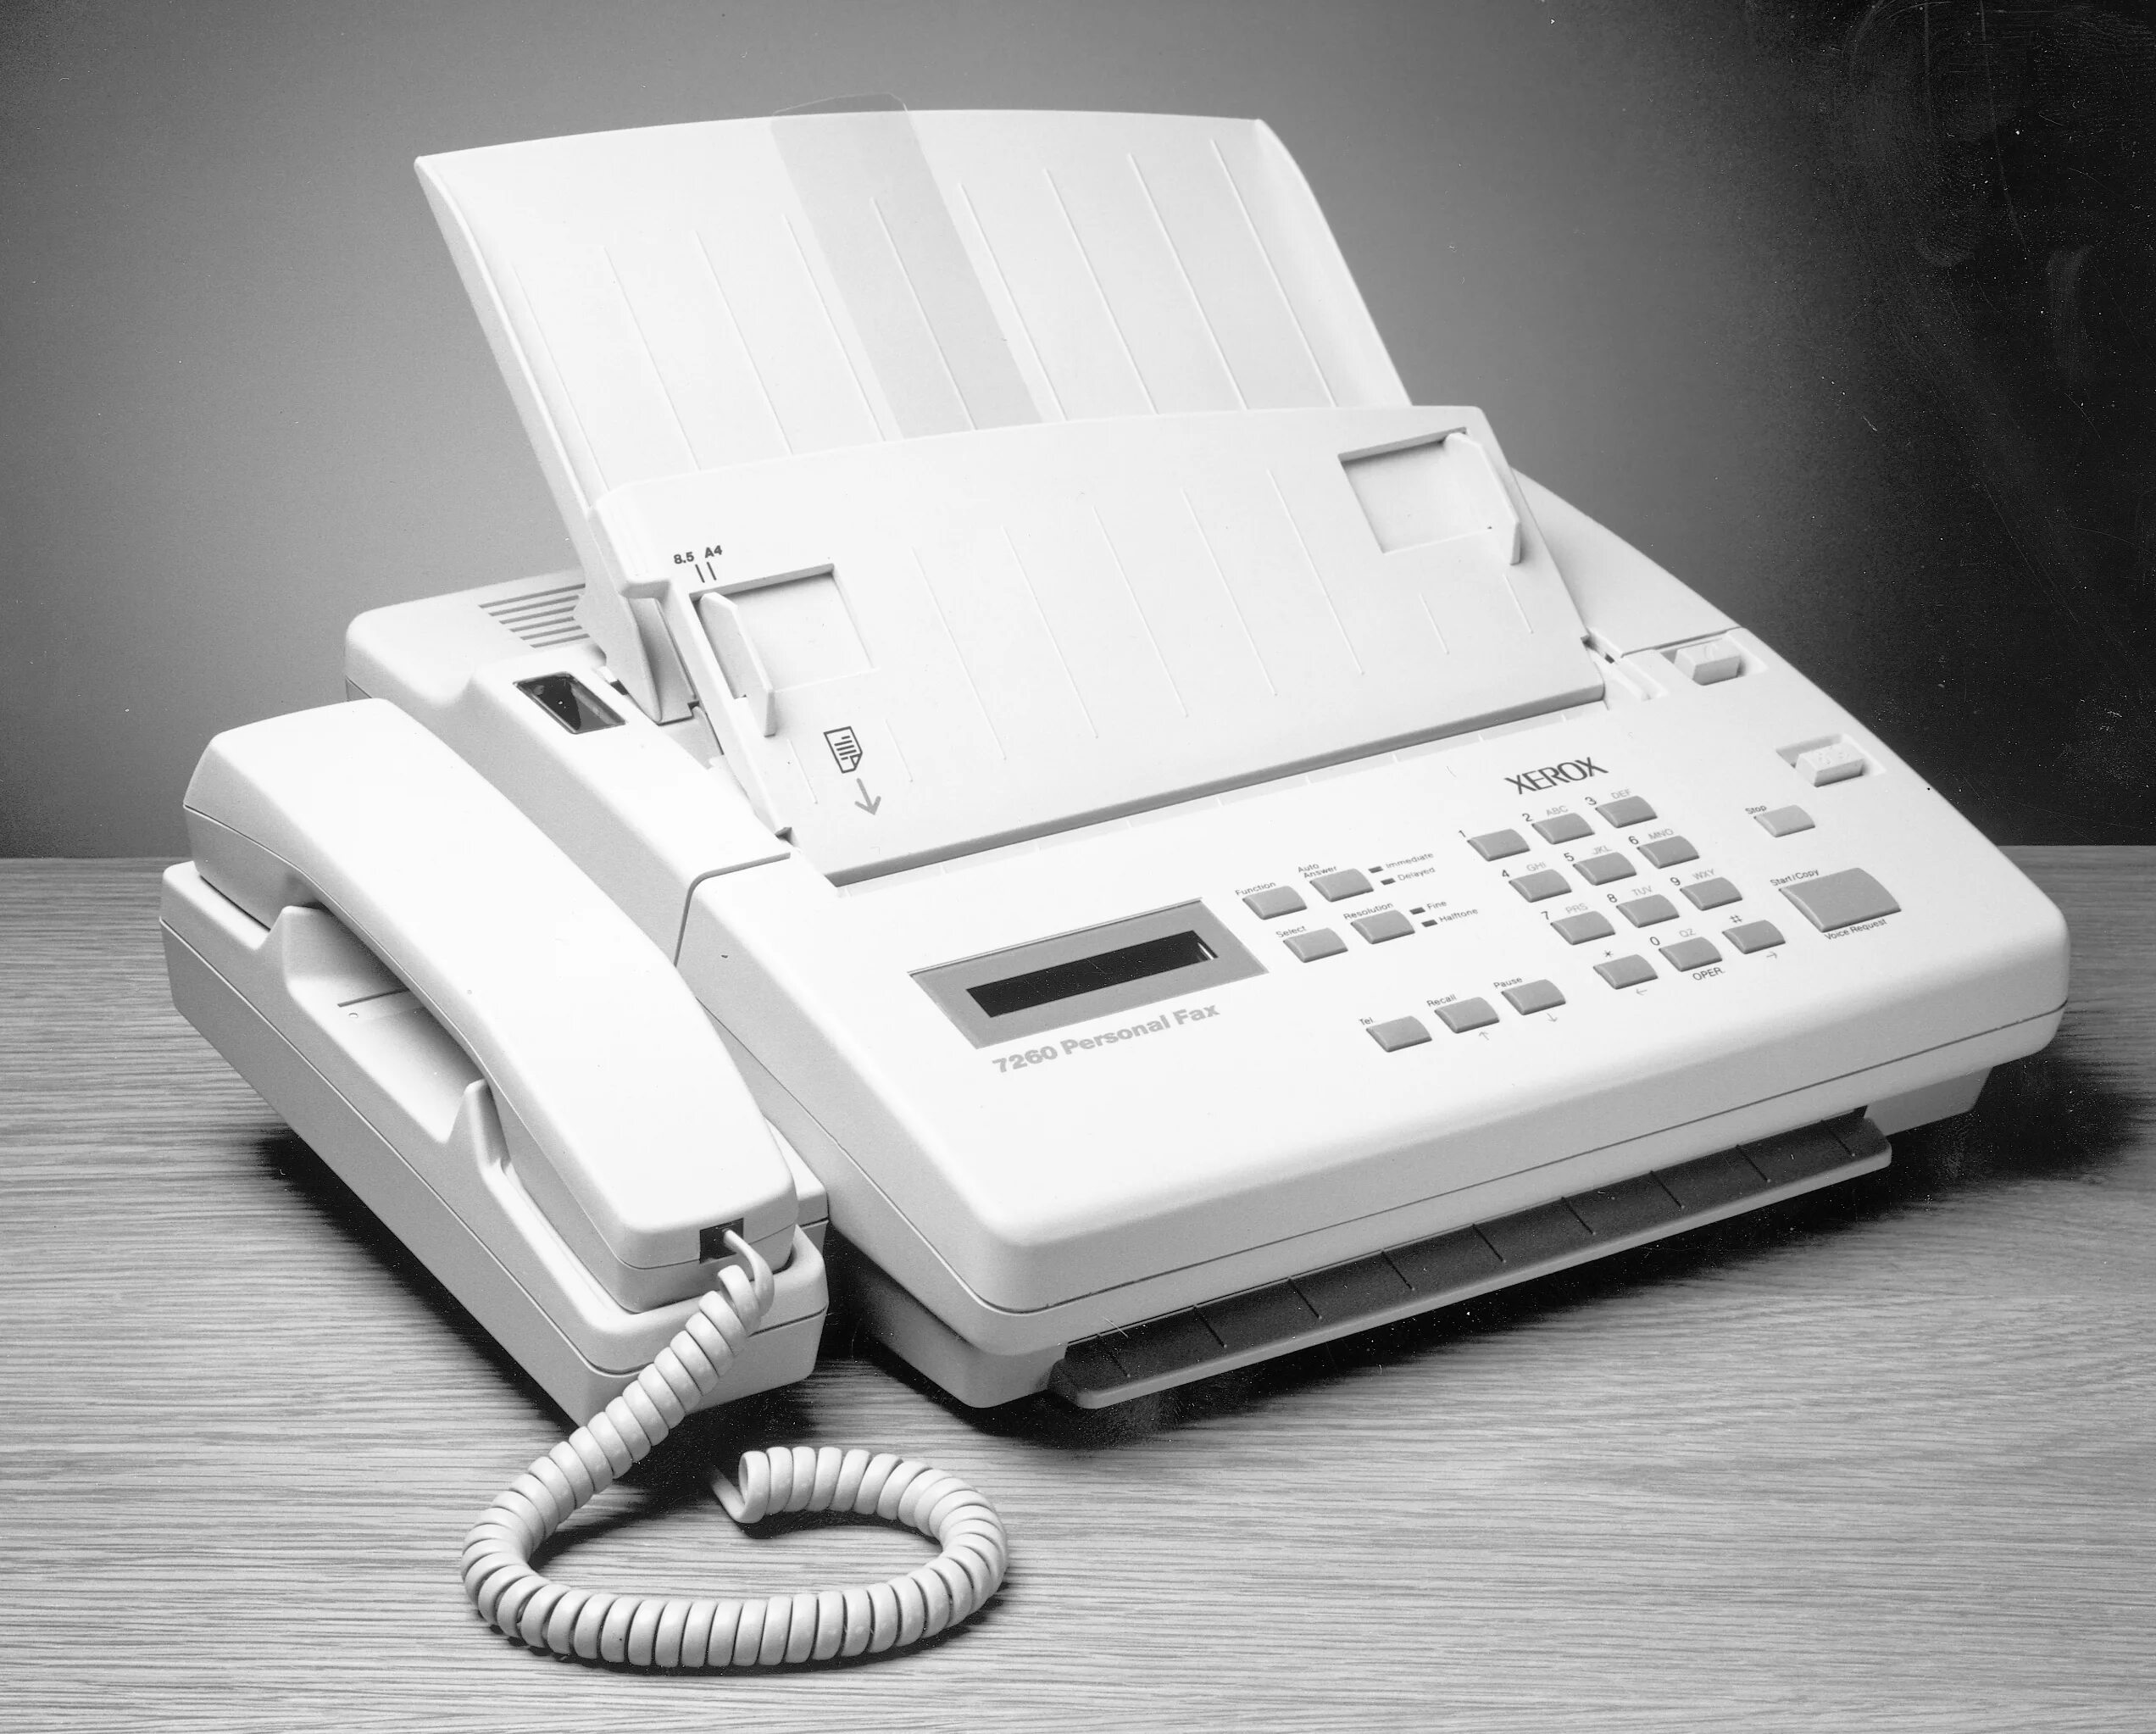 Fax-220 факсимильный аппарат. Xerox Fax 1994. Факсимильный аппарат Panasonic FC-984. Факс 1990. Тел факс 495